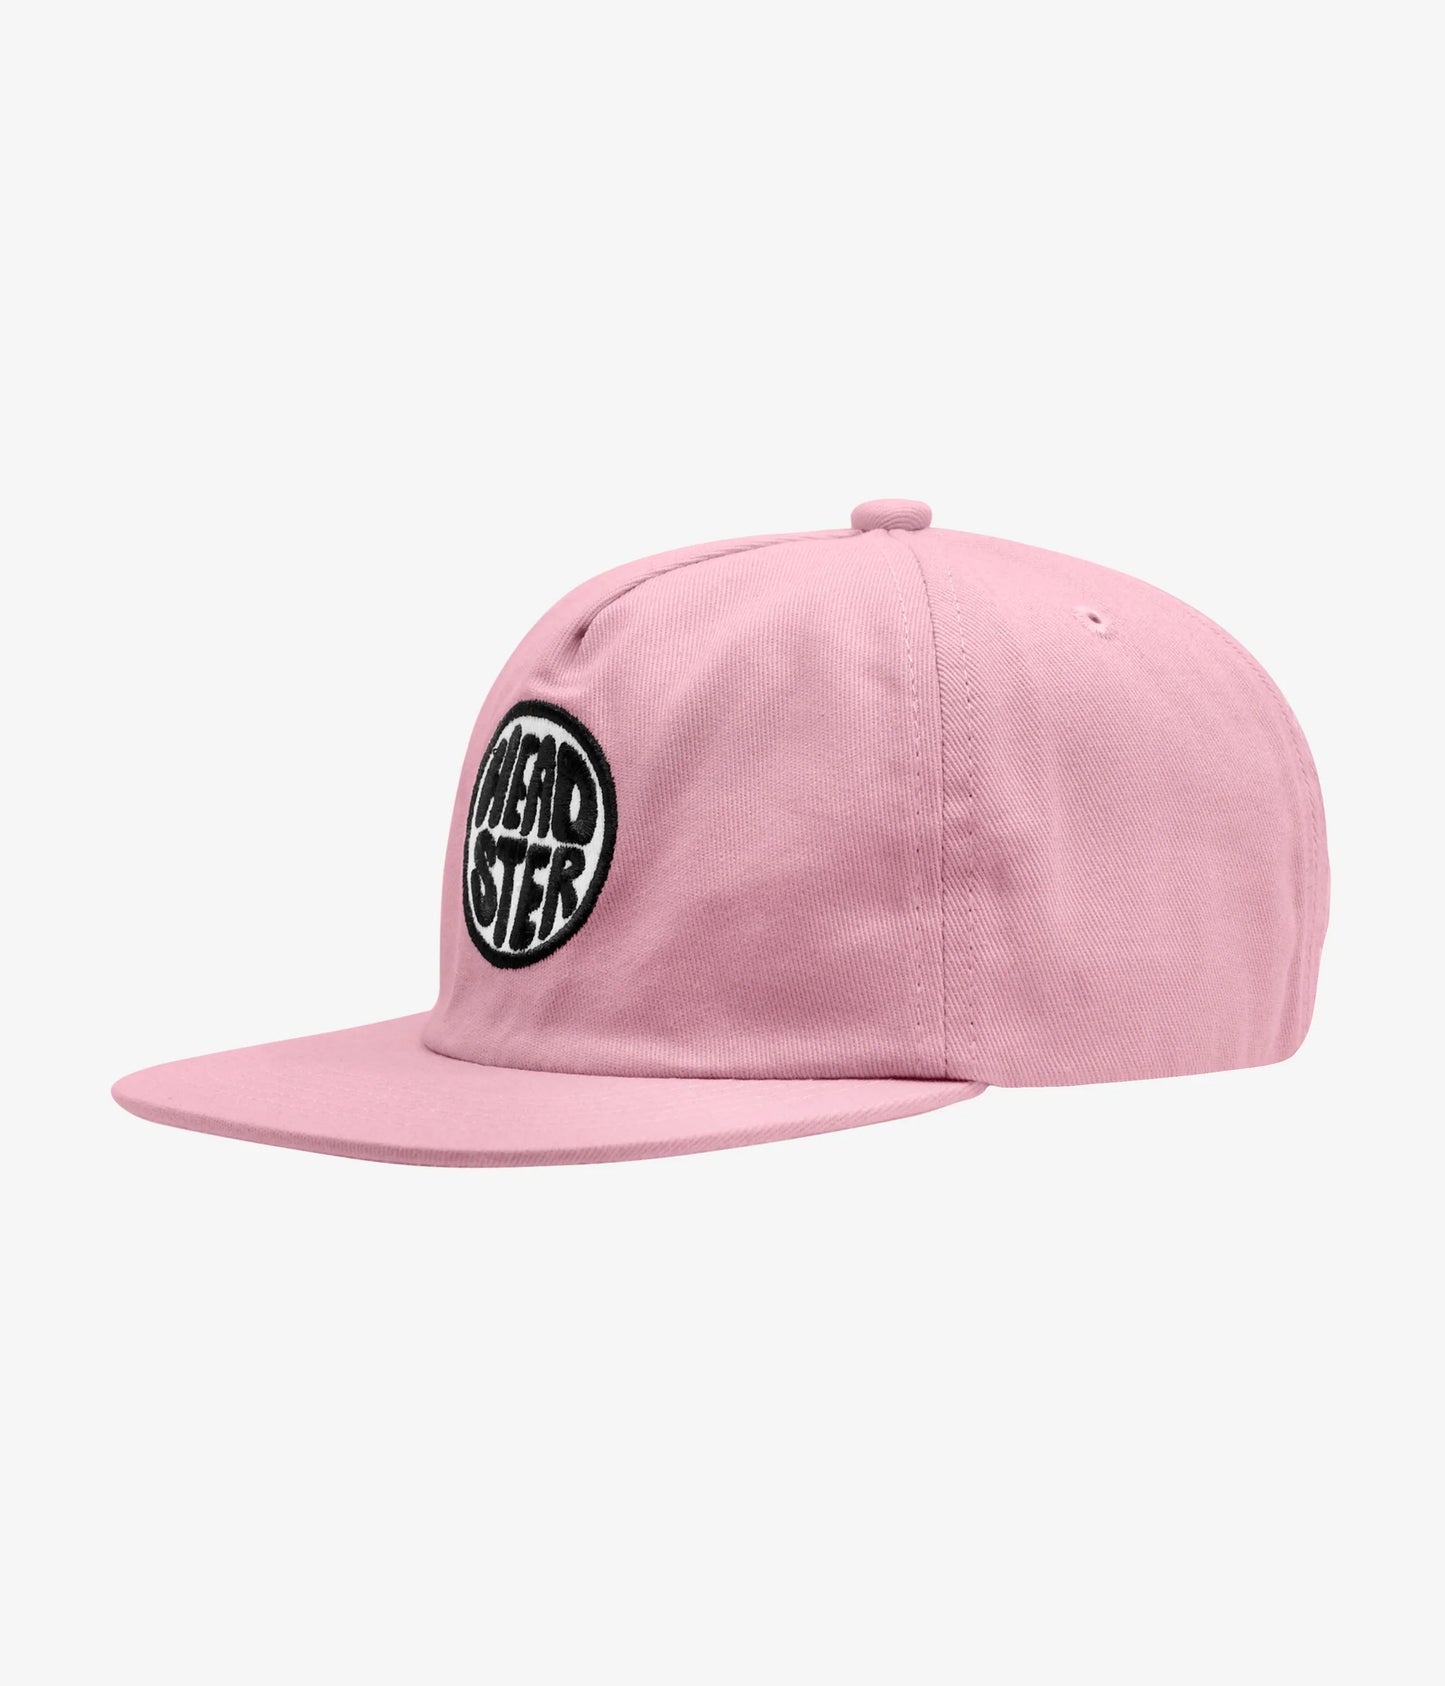 Beachy Pink Hat